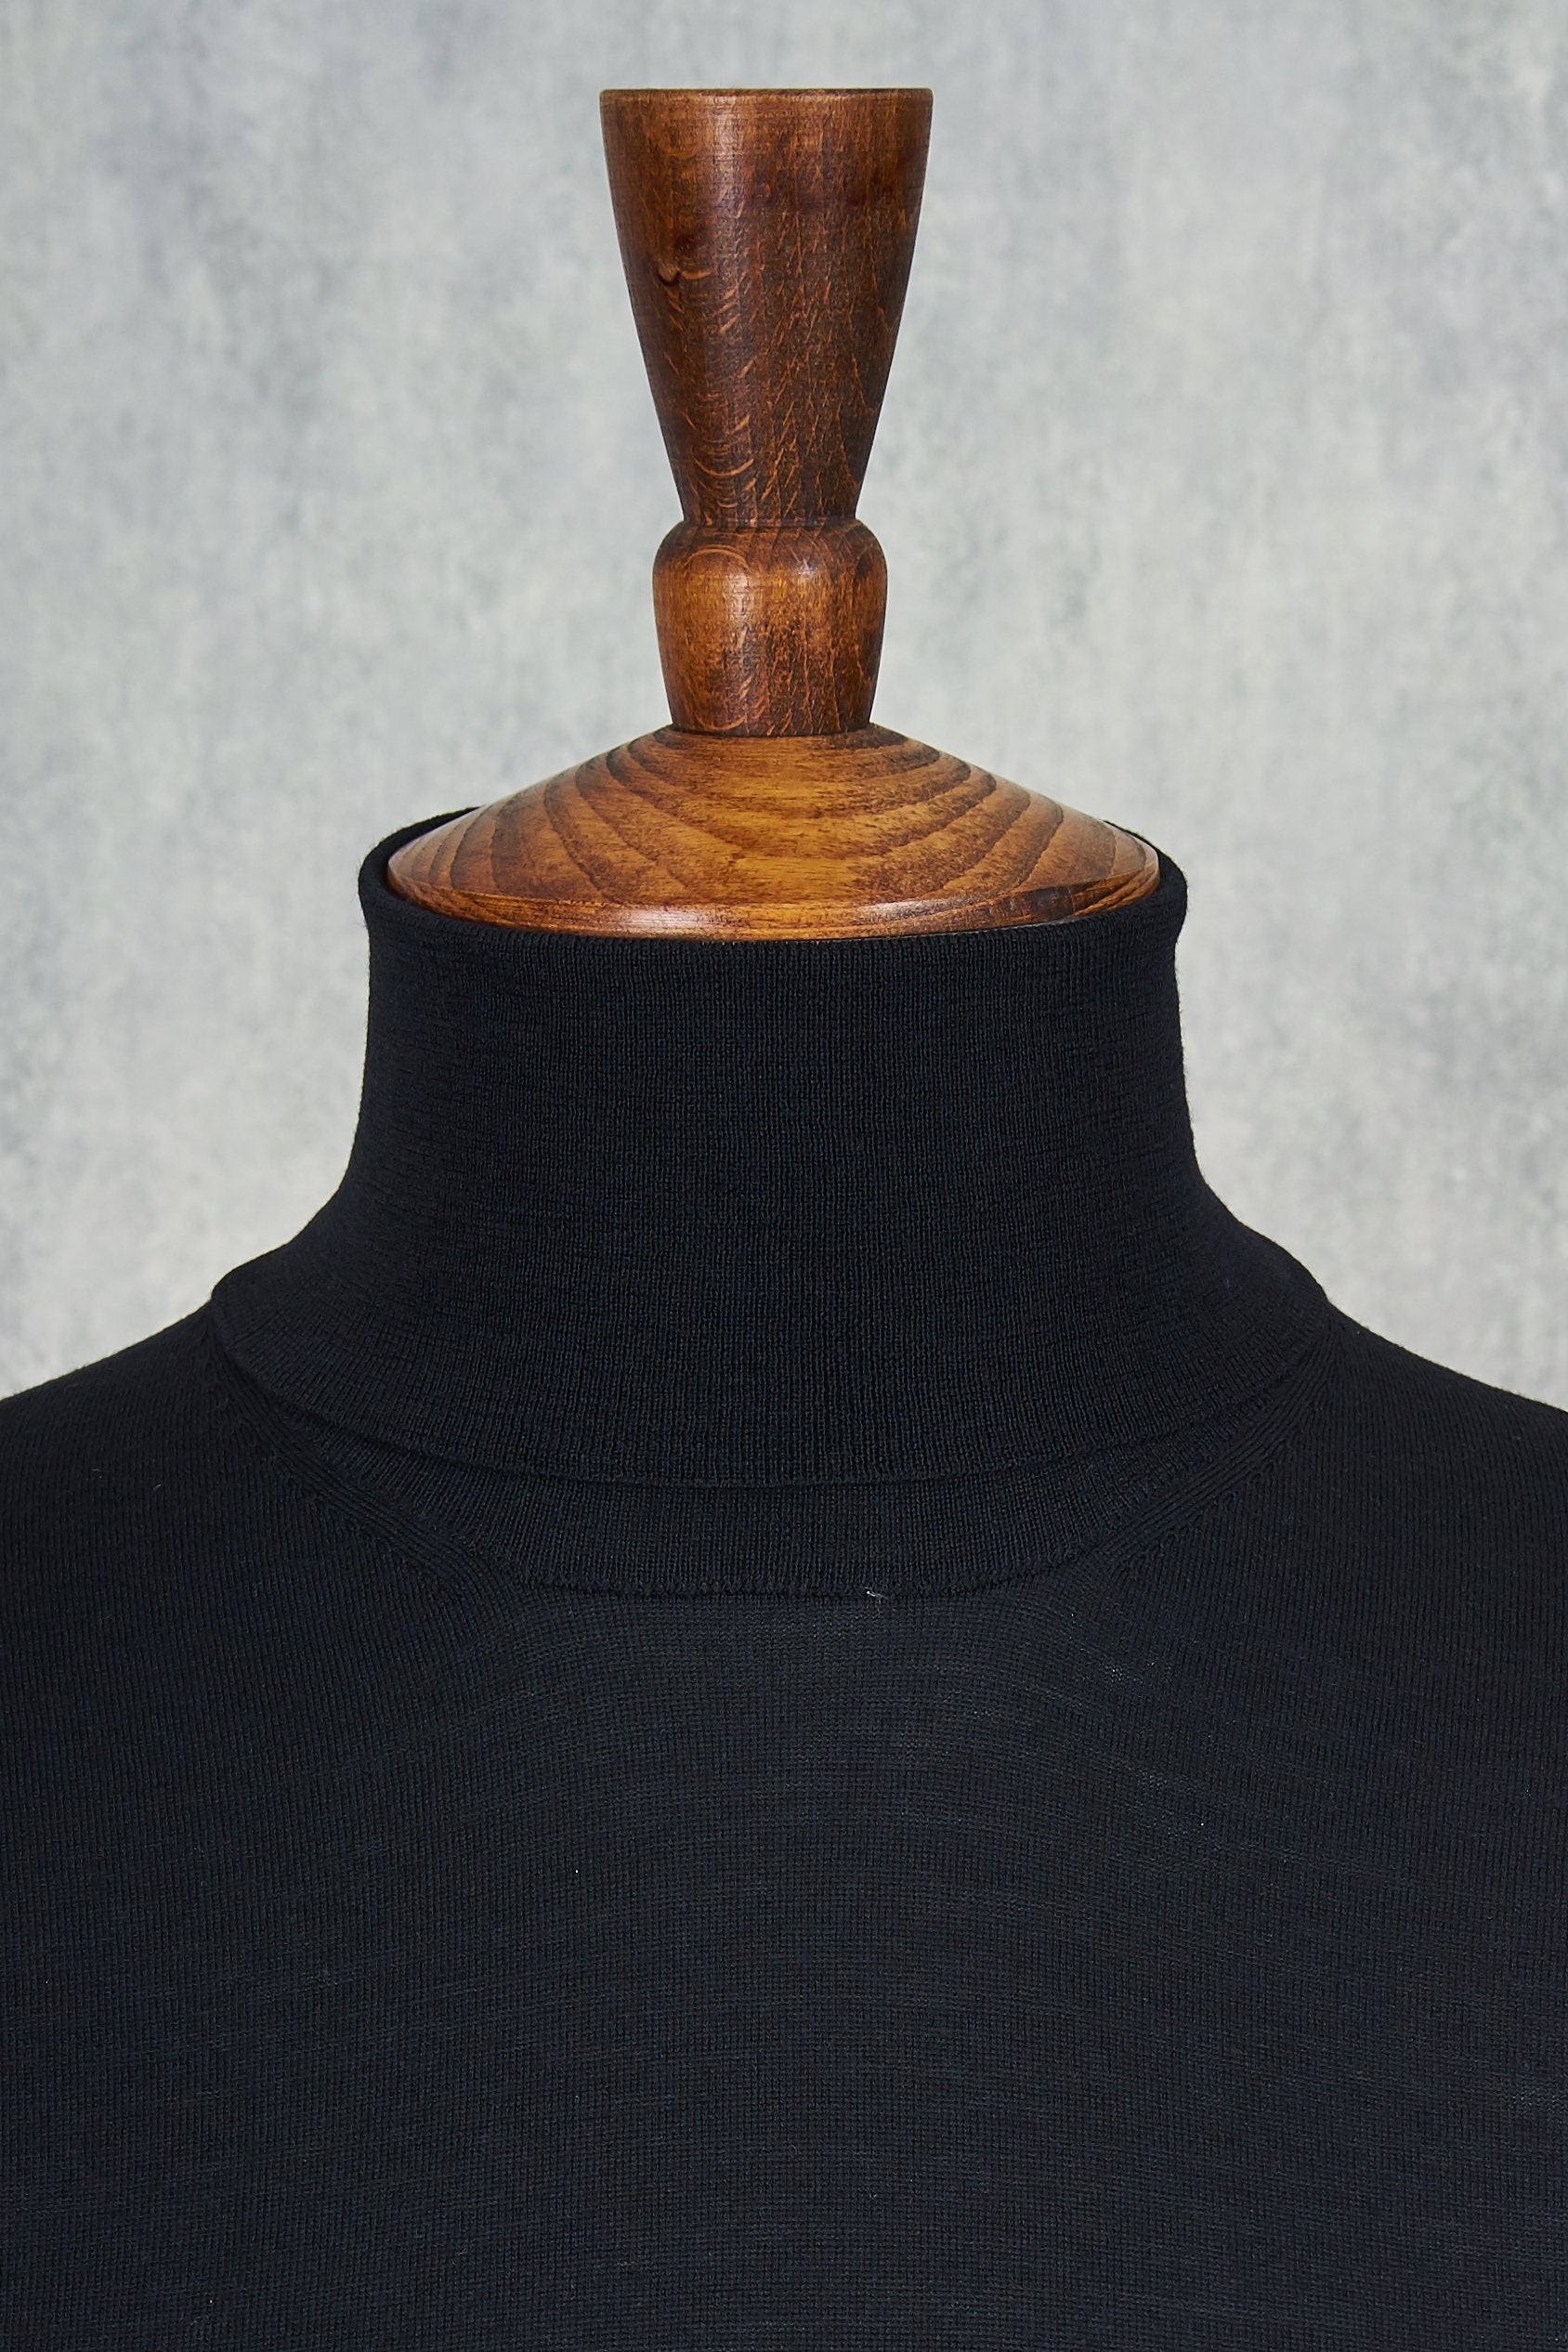 Ascot Chang Black Extra-Fine Merino Wool Turtleneck Sweater